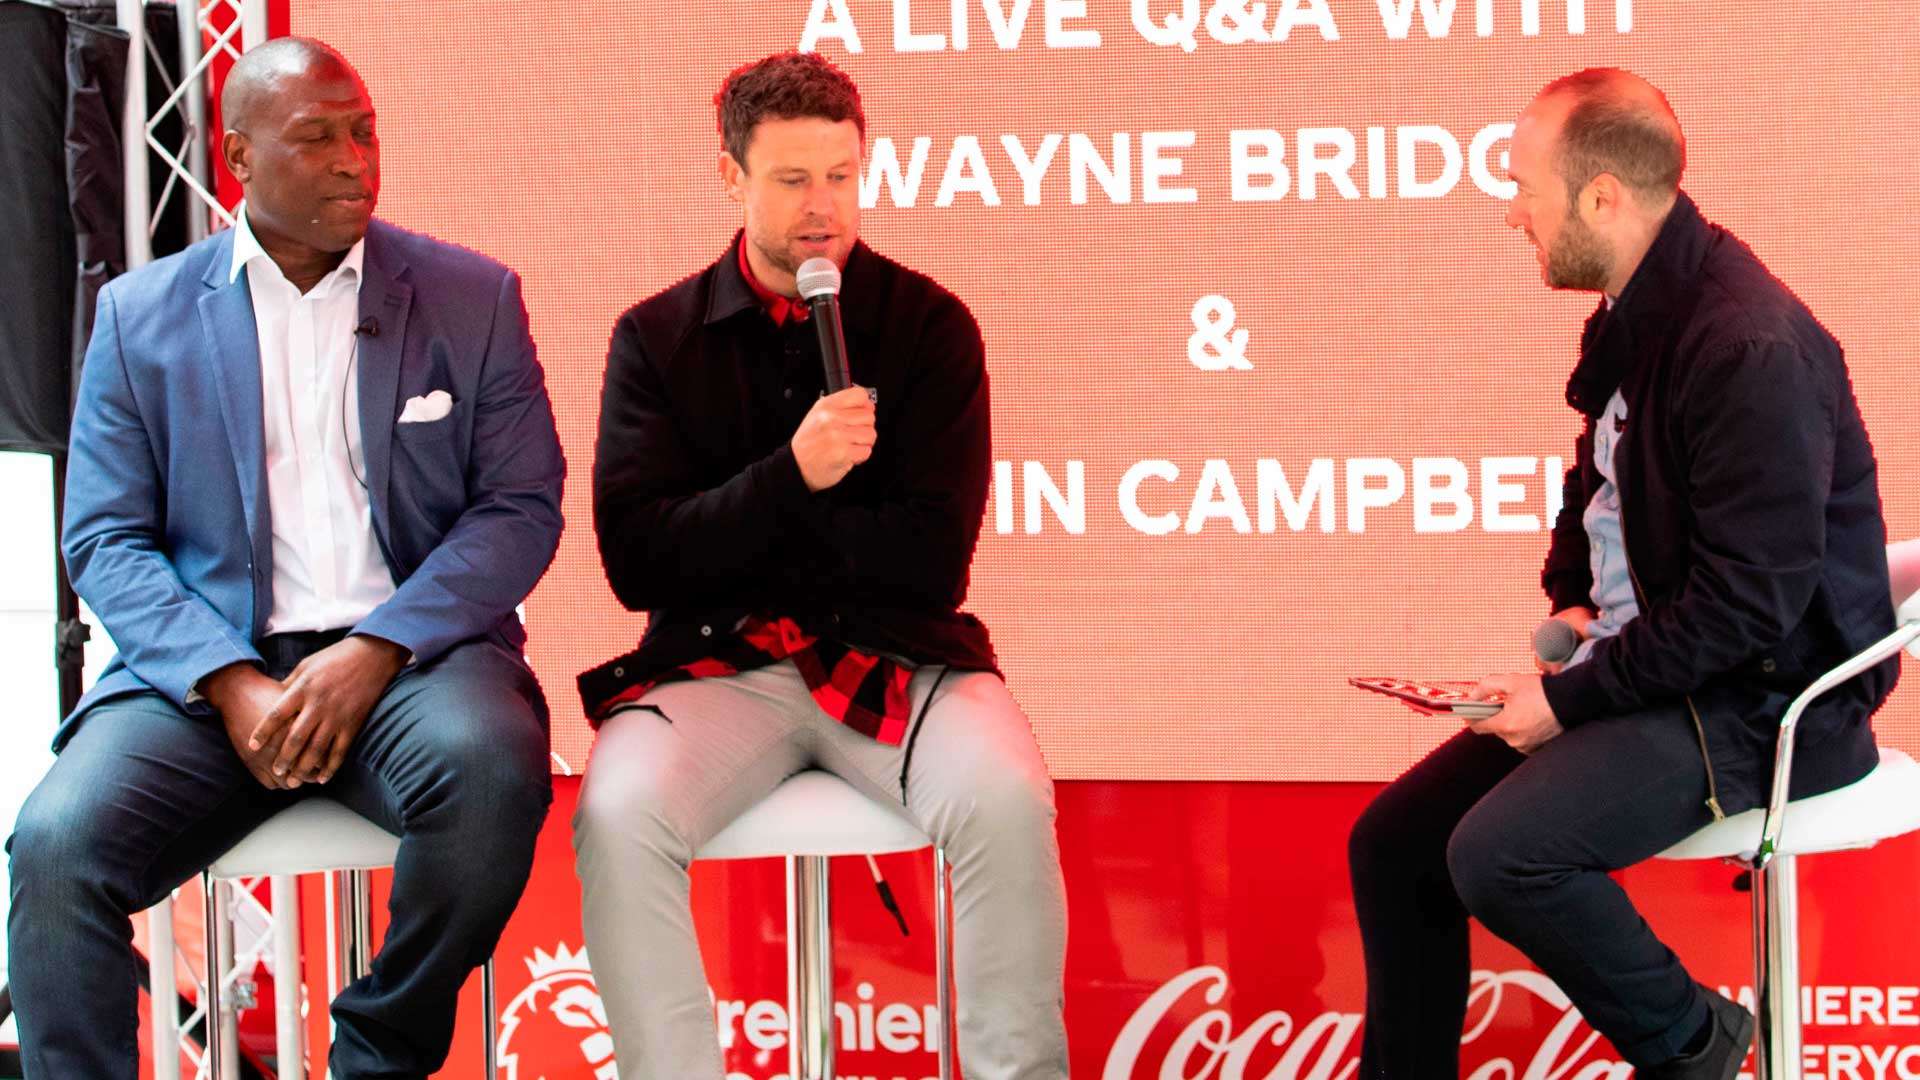 Wayne Bridge and Kevin Campbell